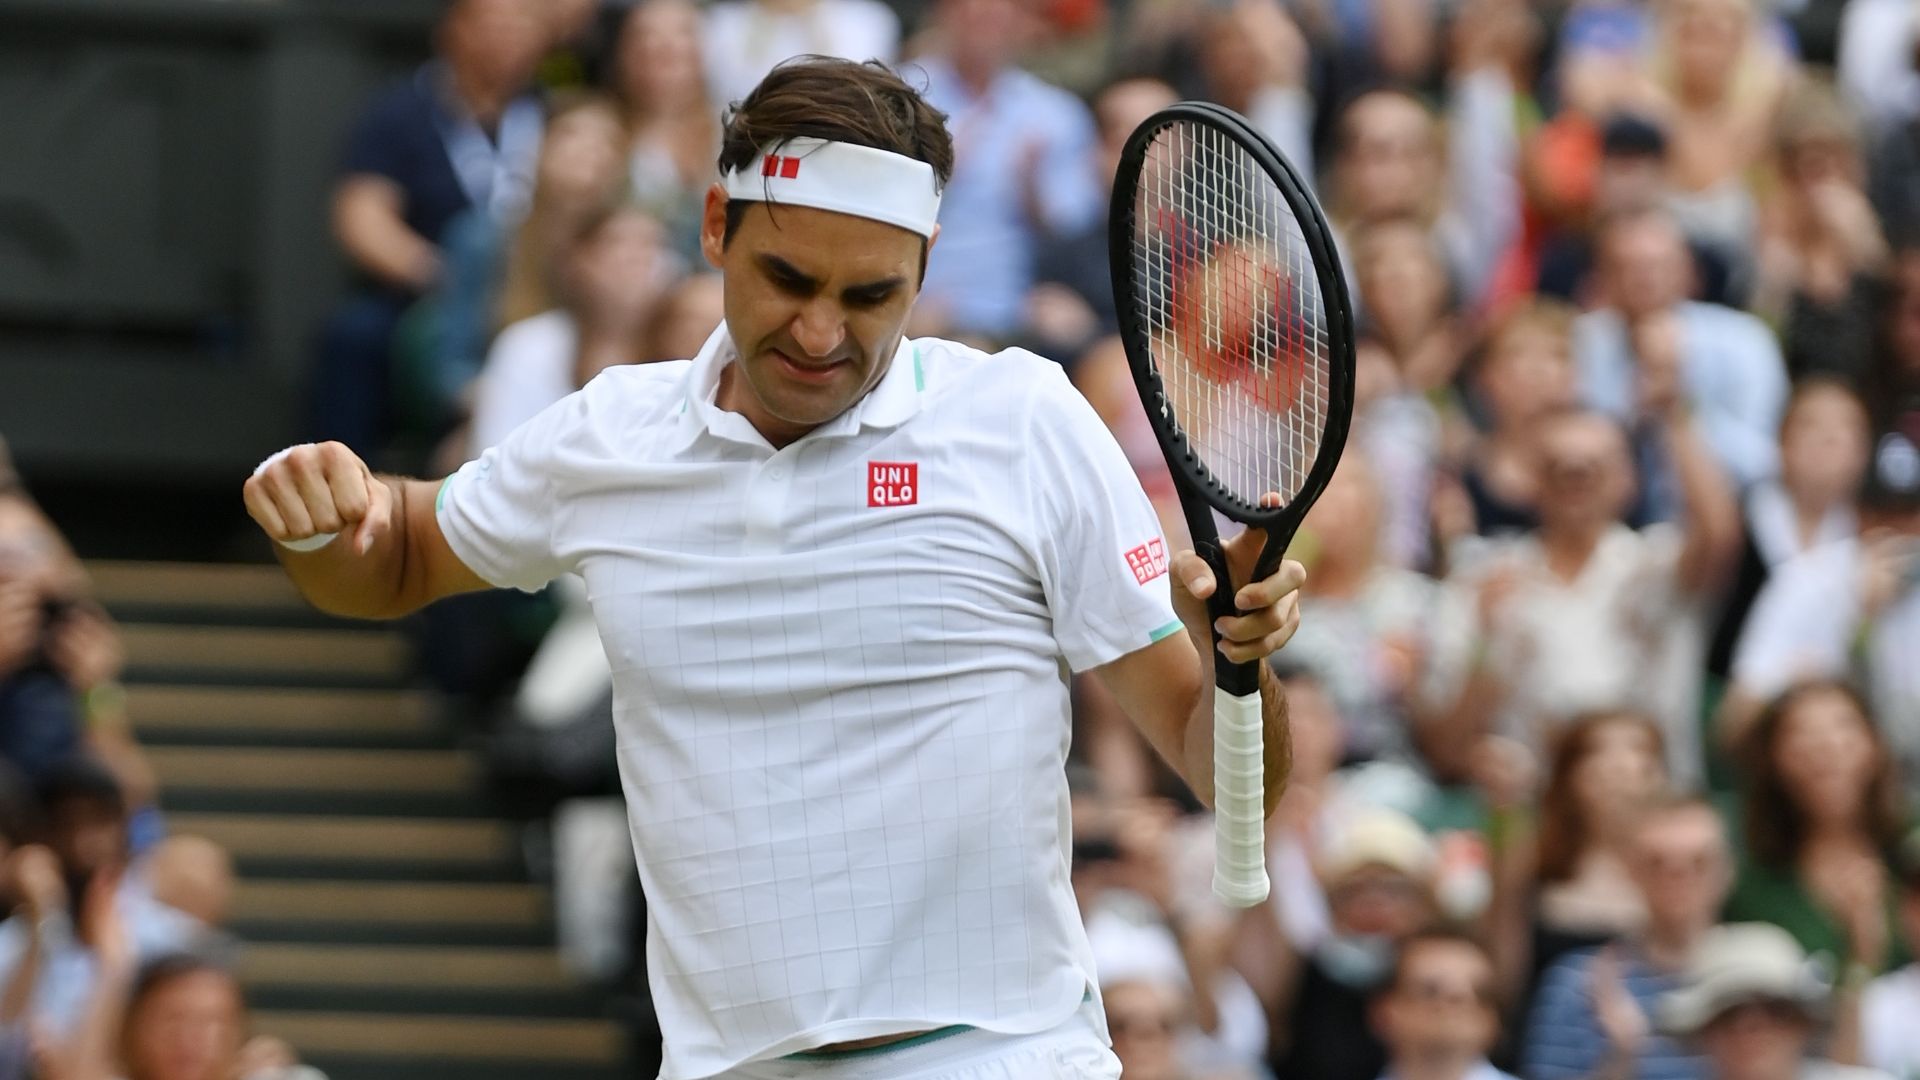 Roger Federer overcomes Cameron Norrie to advance - ESPN Video